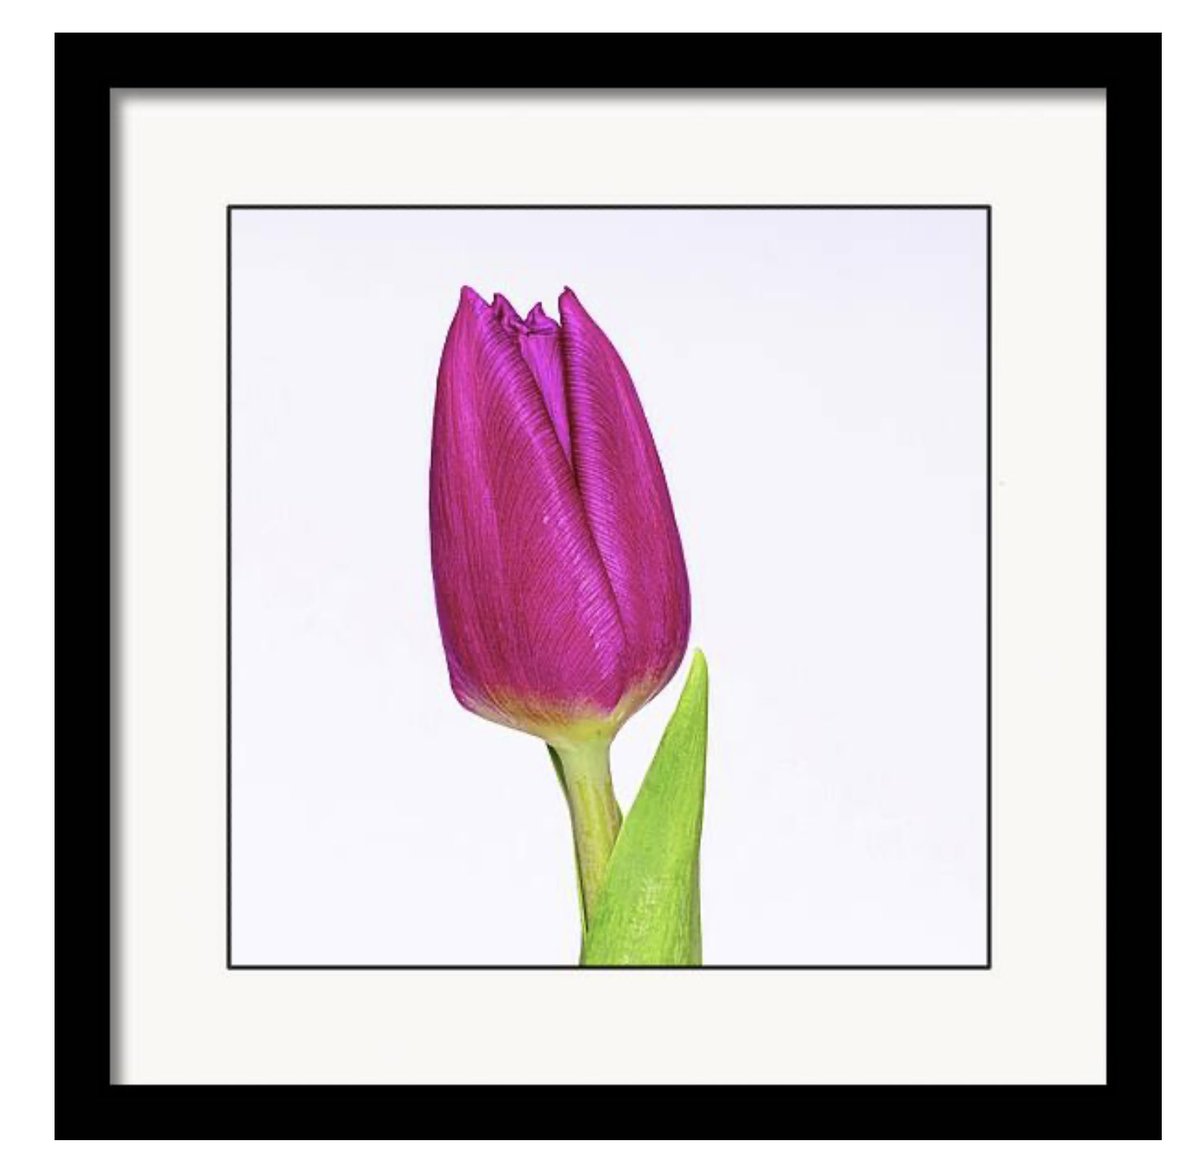 Magenta Tulip #wallart and more..

HERE: 5-tanya-smith.pixels.com/featured/magen…

#WallArtDecor #wallartforsale #giftideas #FLOWER #tulip #tulips #BuyIntoArt #FillThatEmptyWall